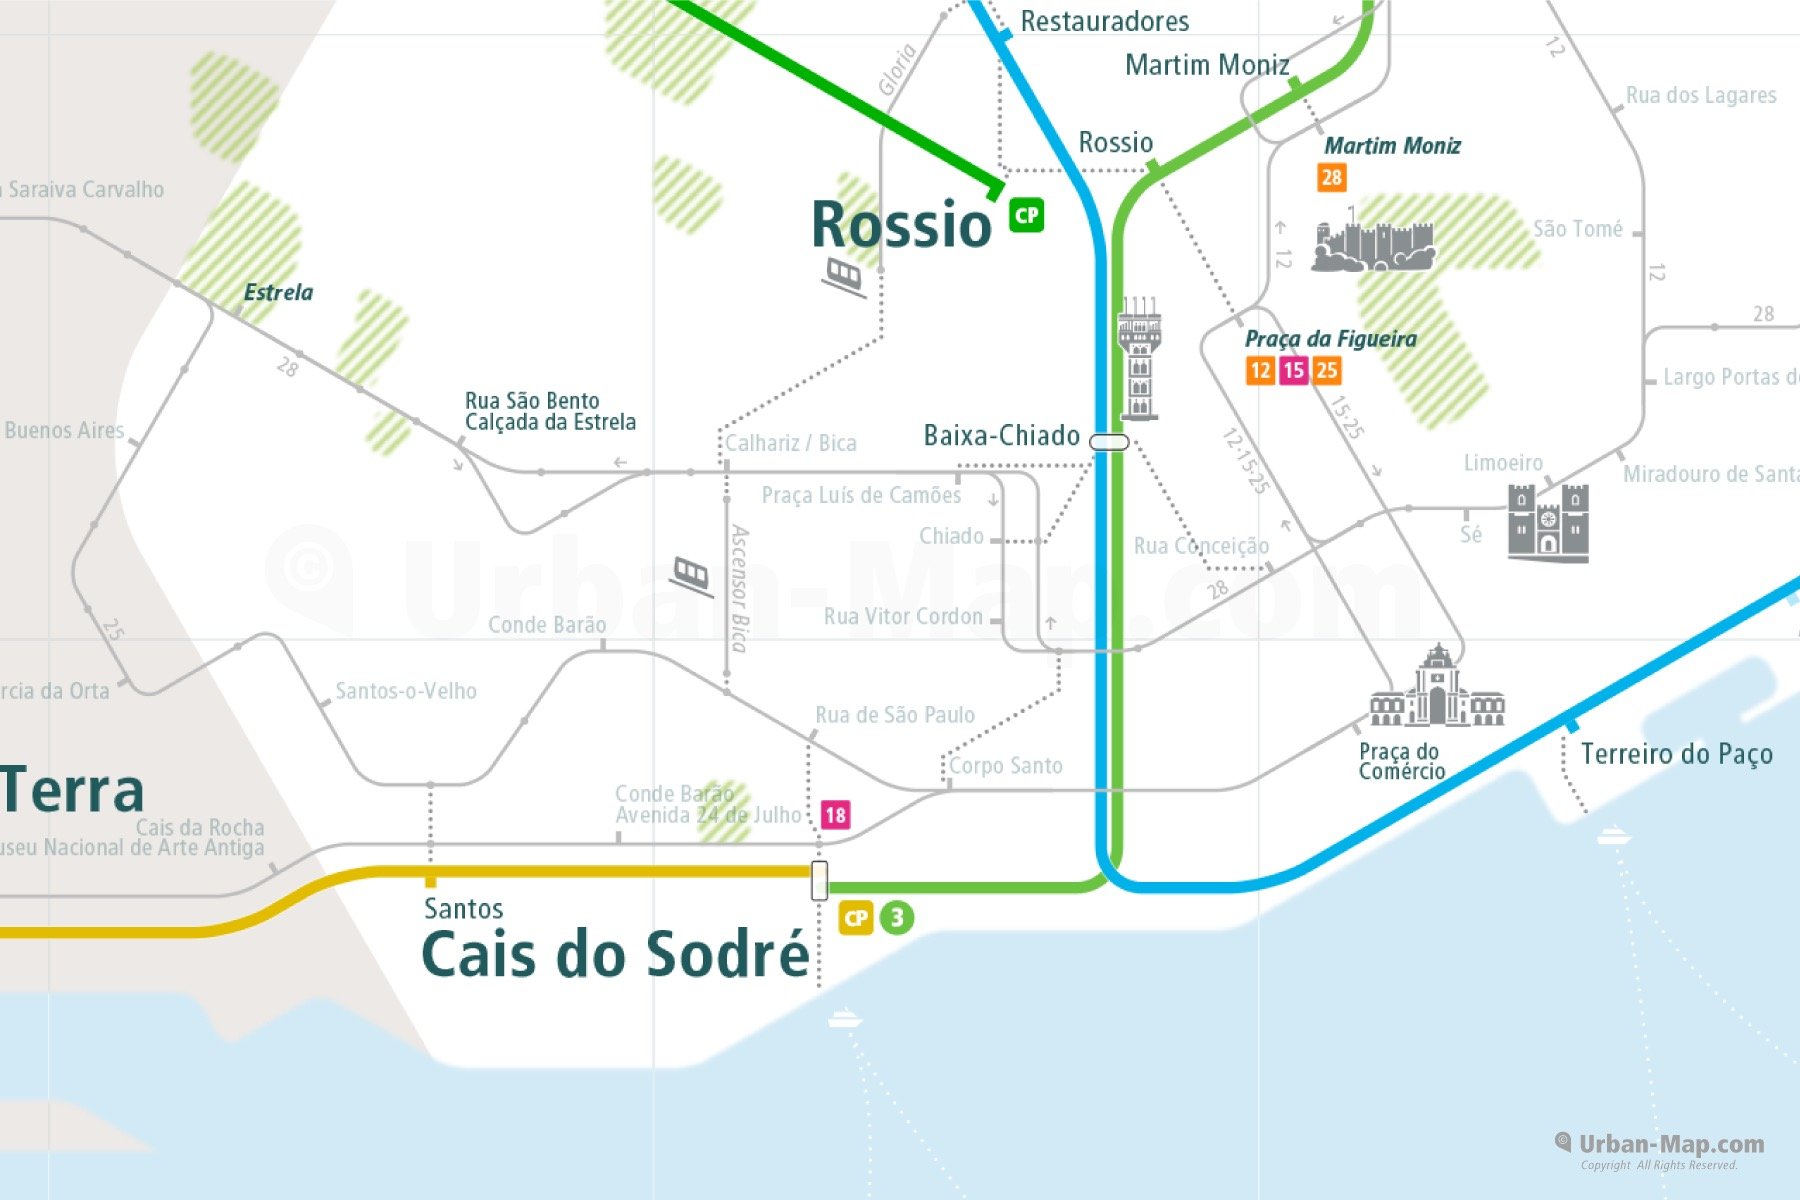 Lisbon City Rail Map shows the train and public transportation routes of metro, tram, commuter train - Close-Up